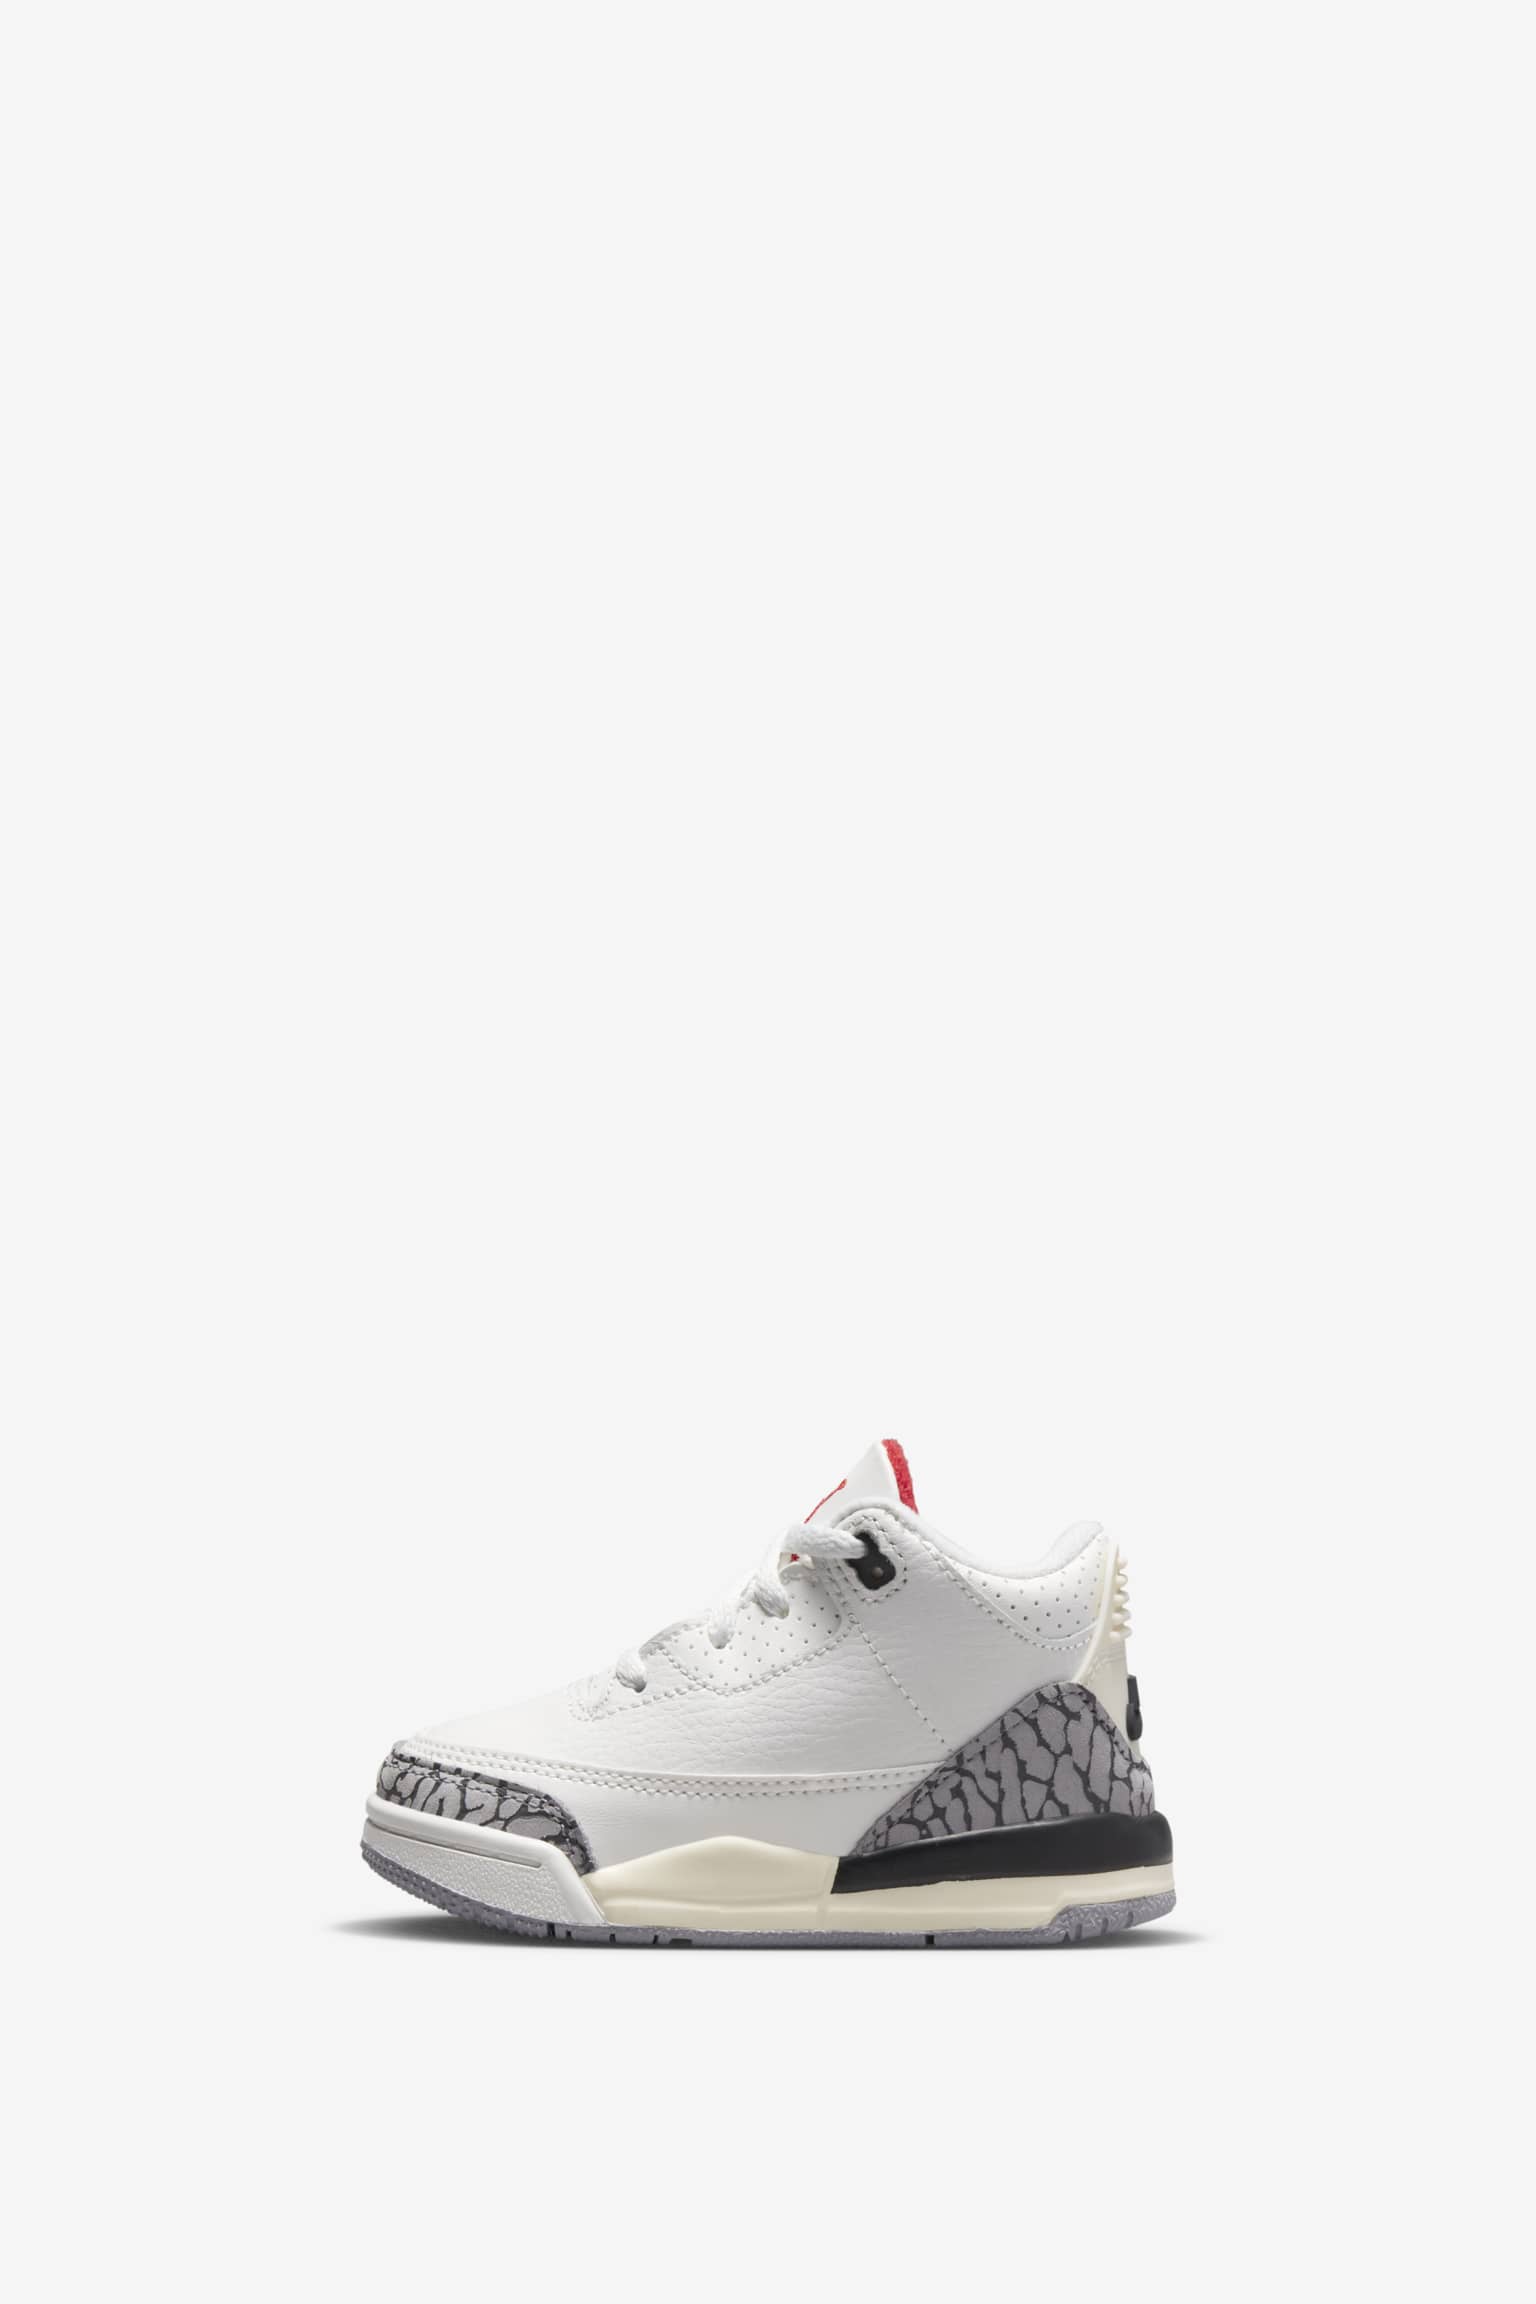 Nike Air Jordan 3White Cement Reimagined